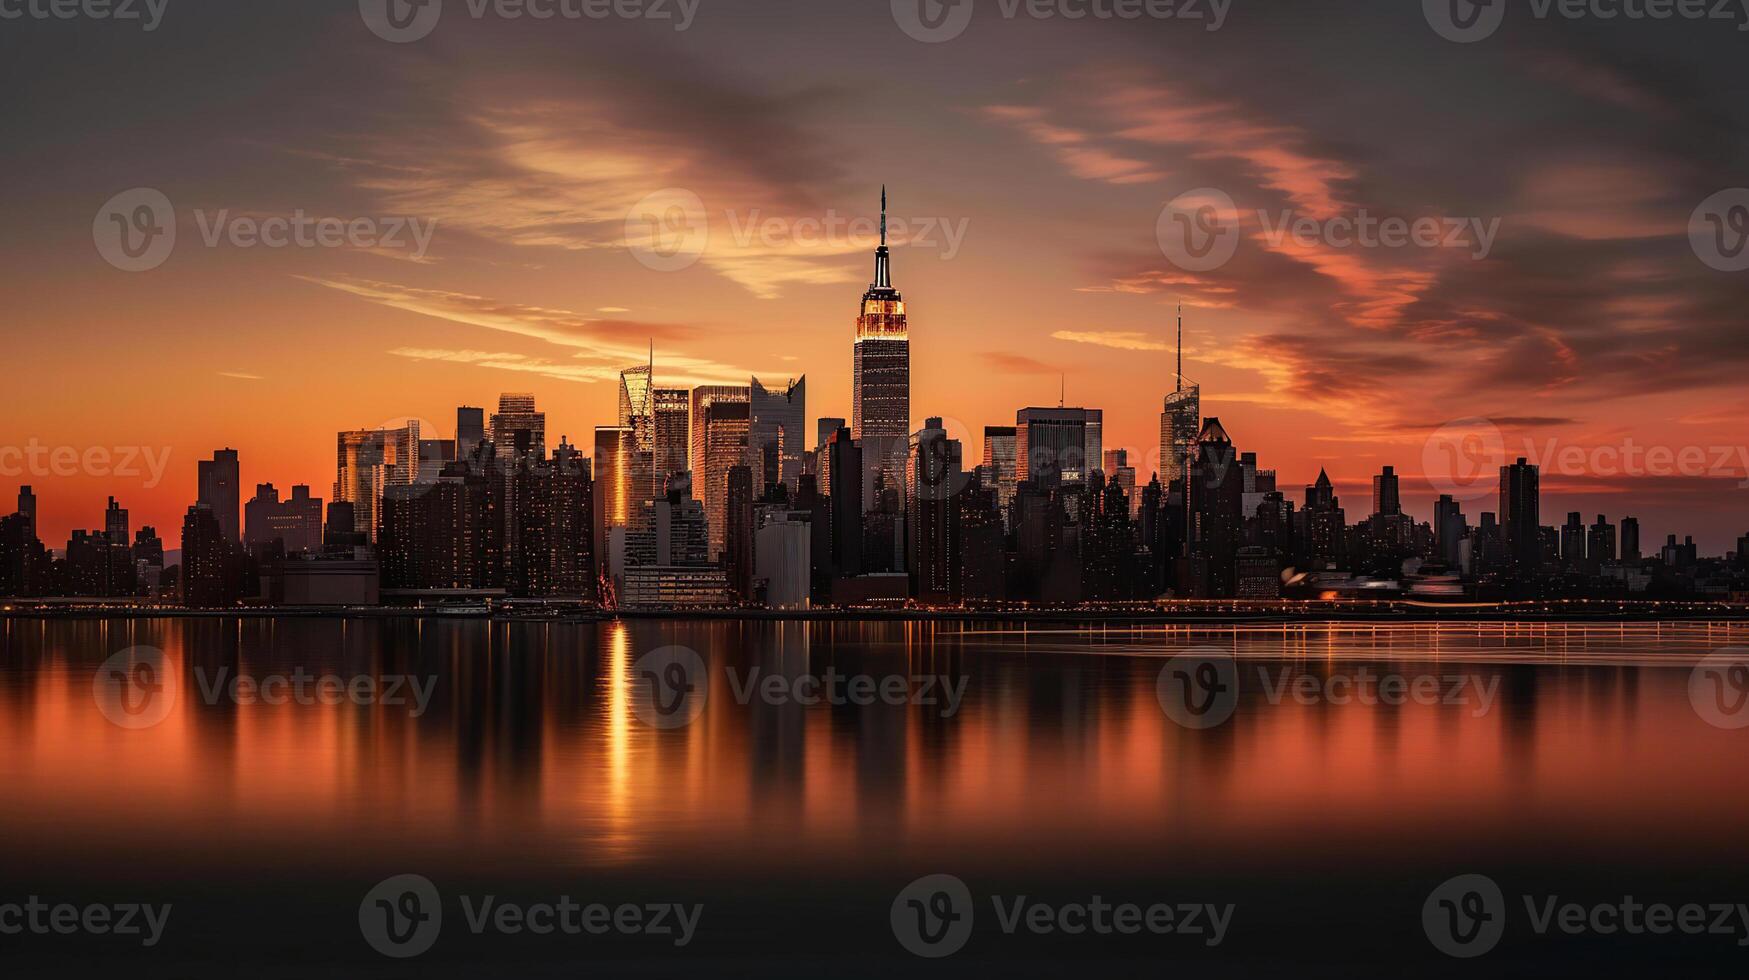 verbazingwekkend panorama visie van nieuw york stad horizon en wolkenkrabber Bij zonsondergang. mooi nacht visie in Midtown Manhattan, generatief ai foto